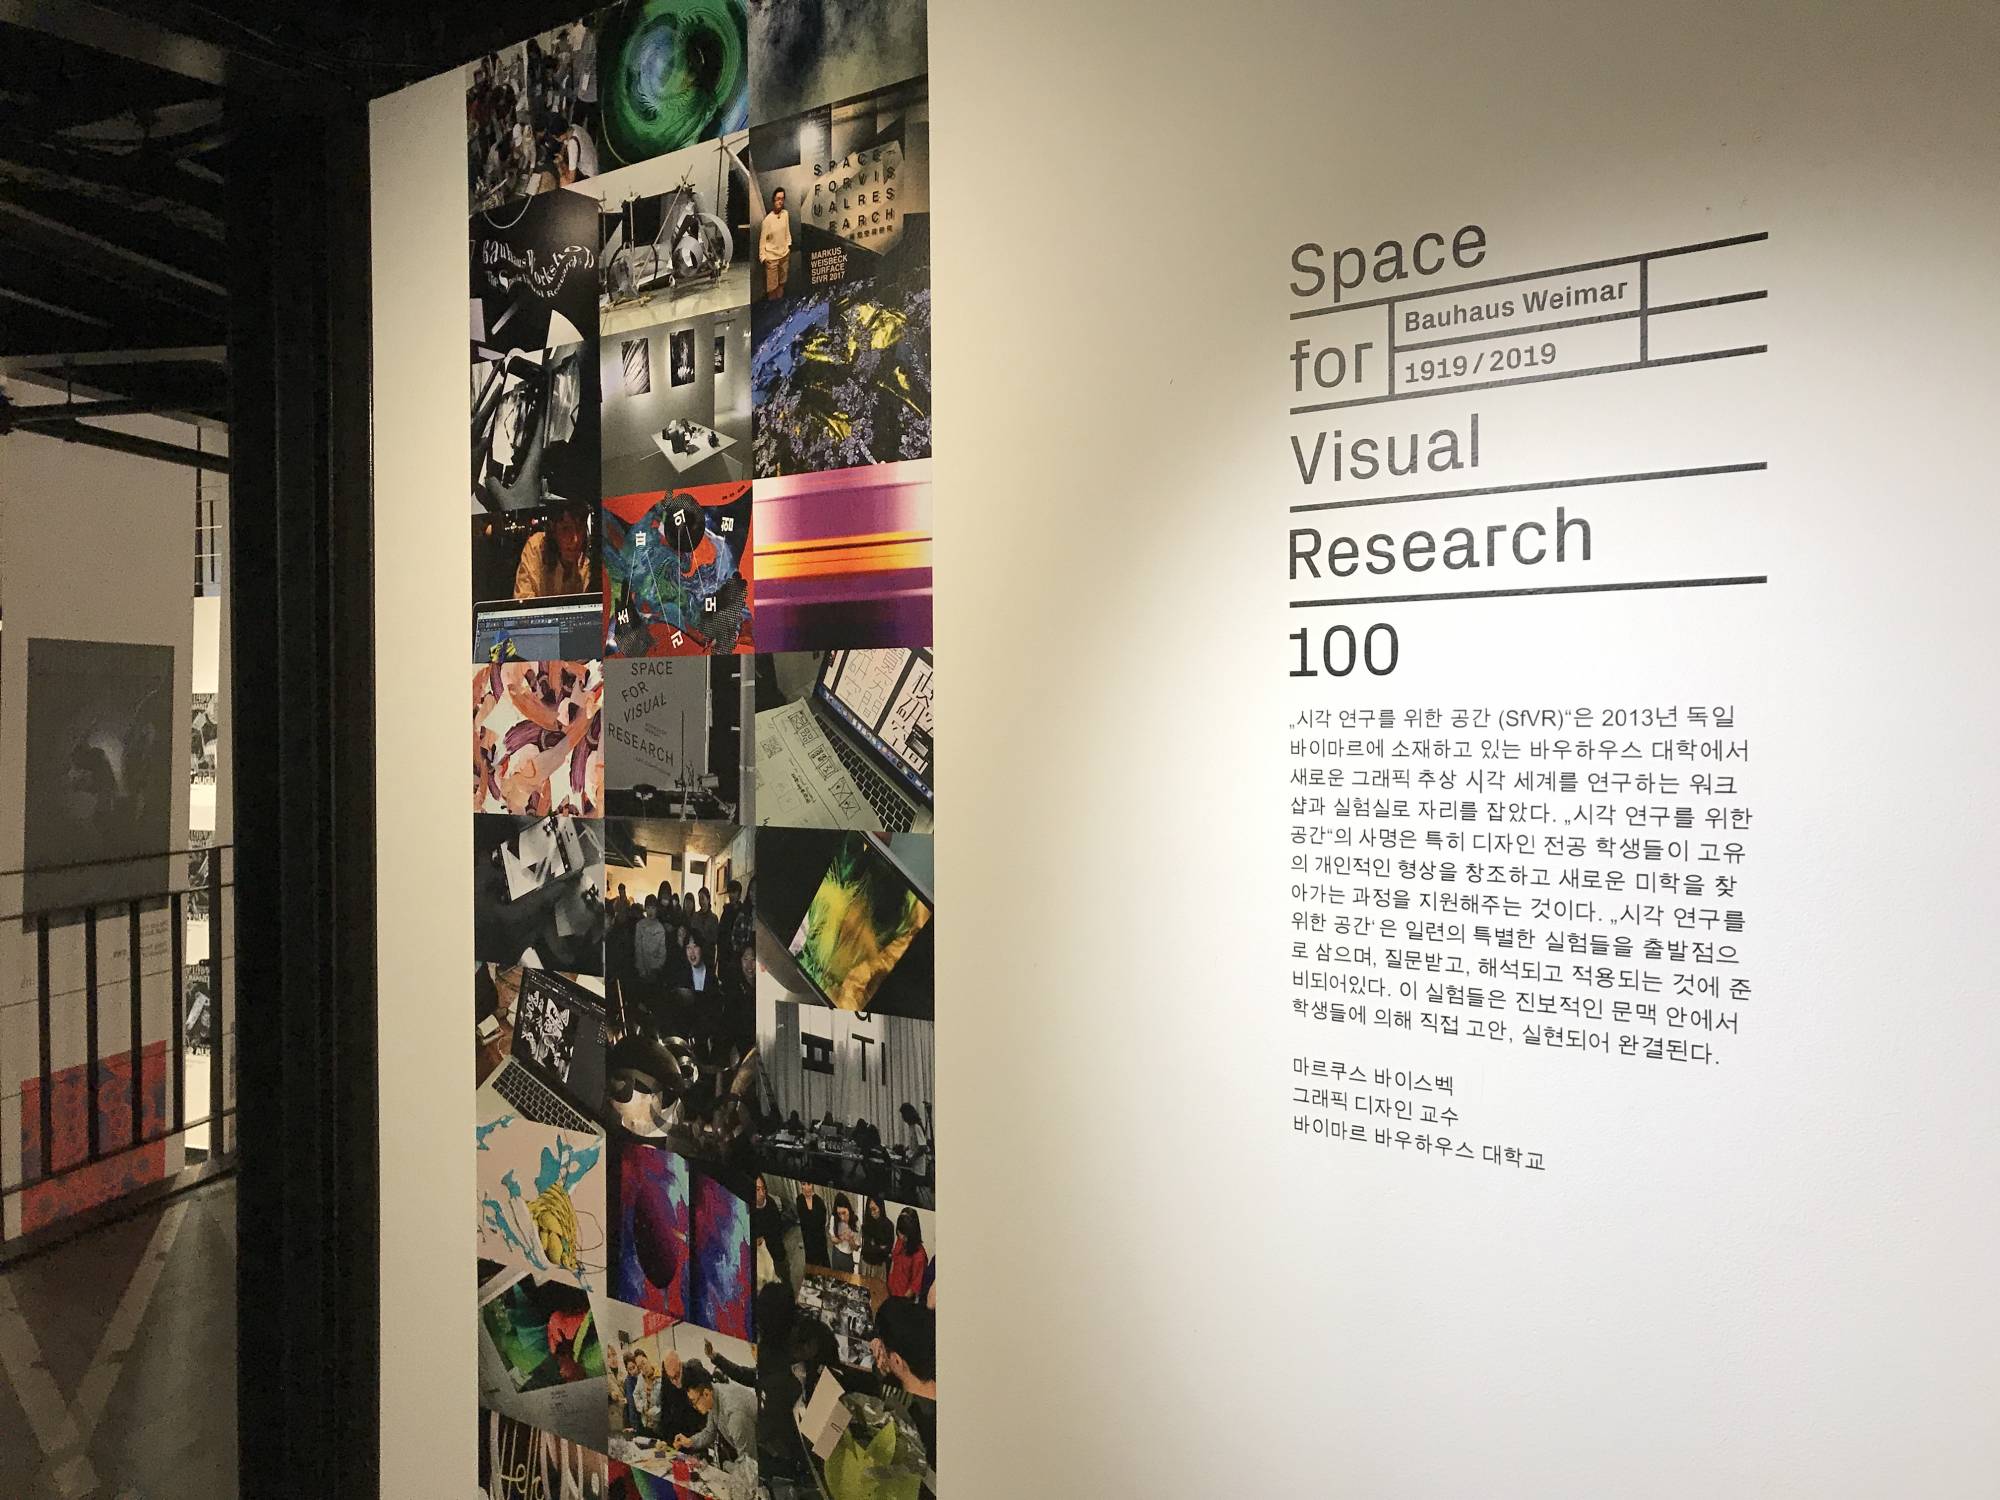 SfVR Exhibition at Gwangju Design Biennale